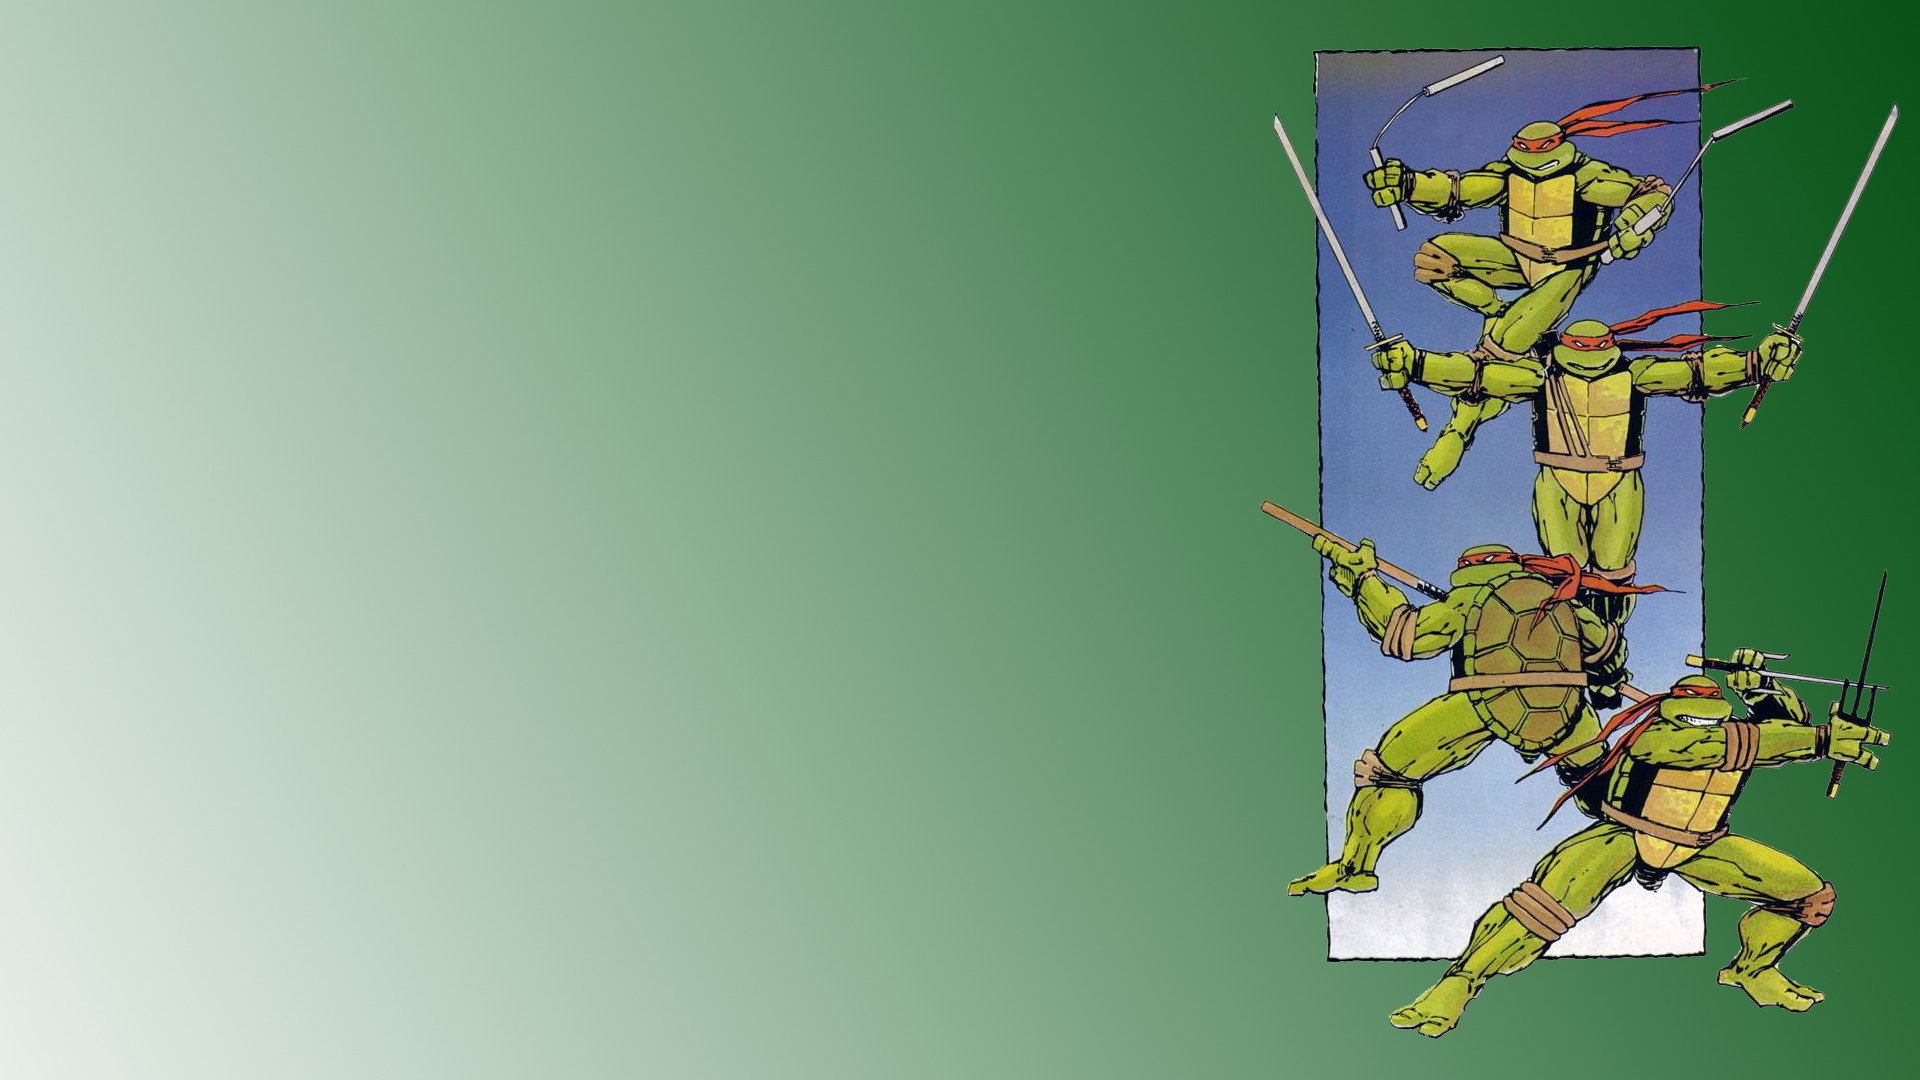 Video Game Teenage Mutant Ninja Turtles HD Wallpaper | Background Image